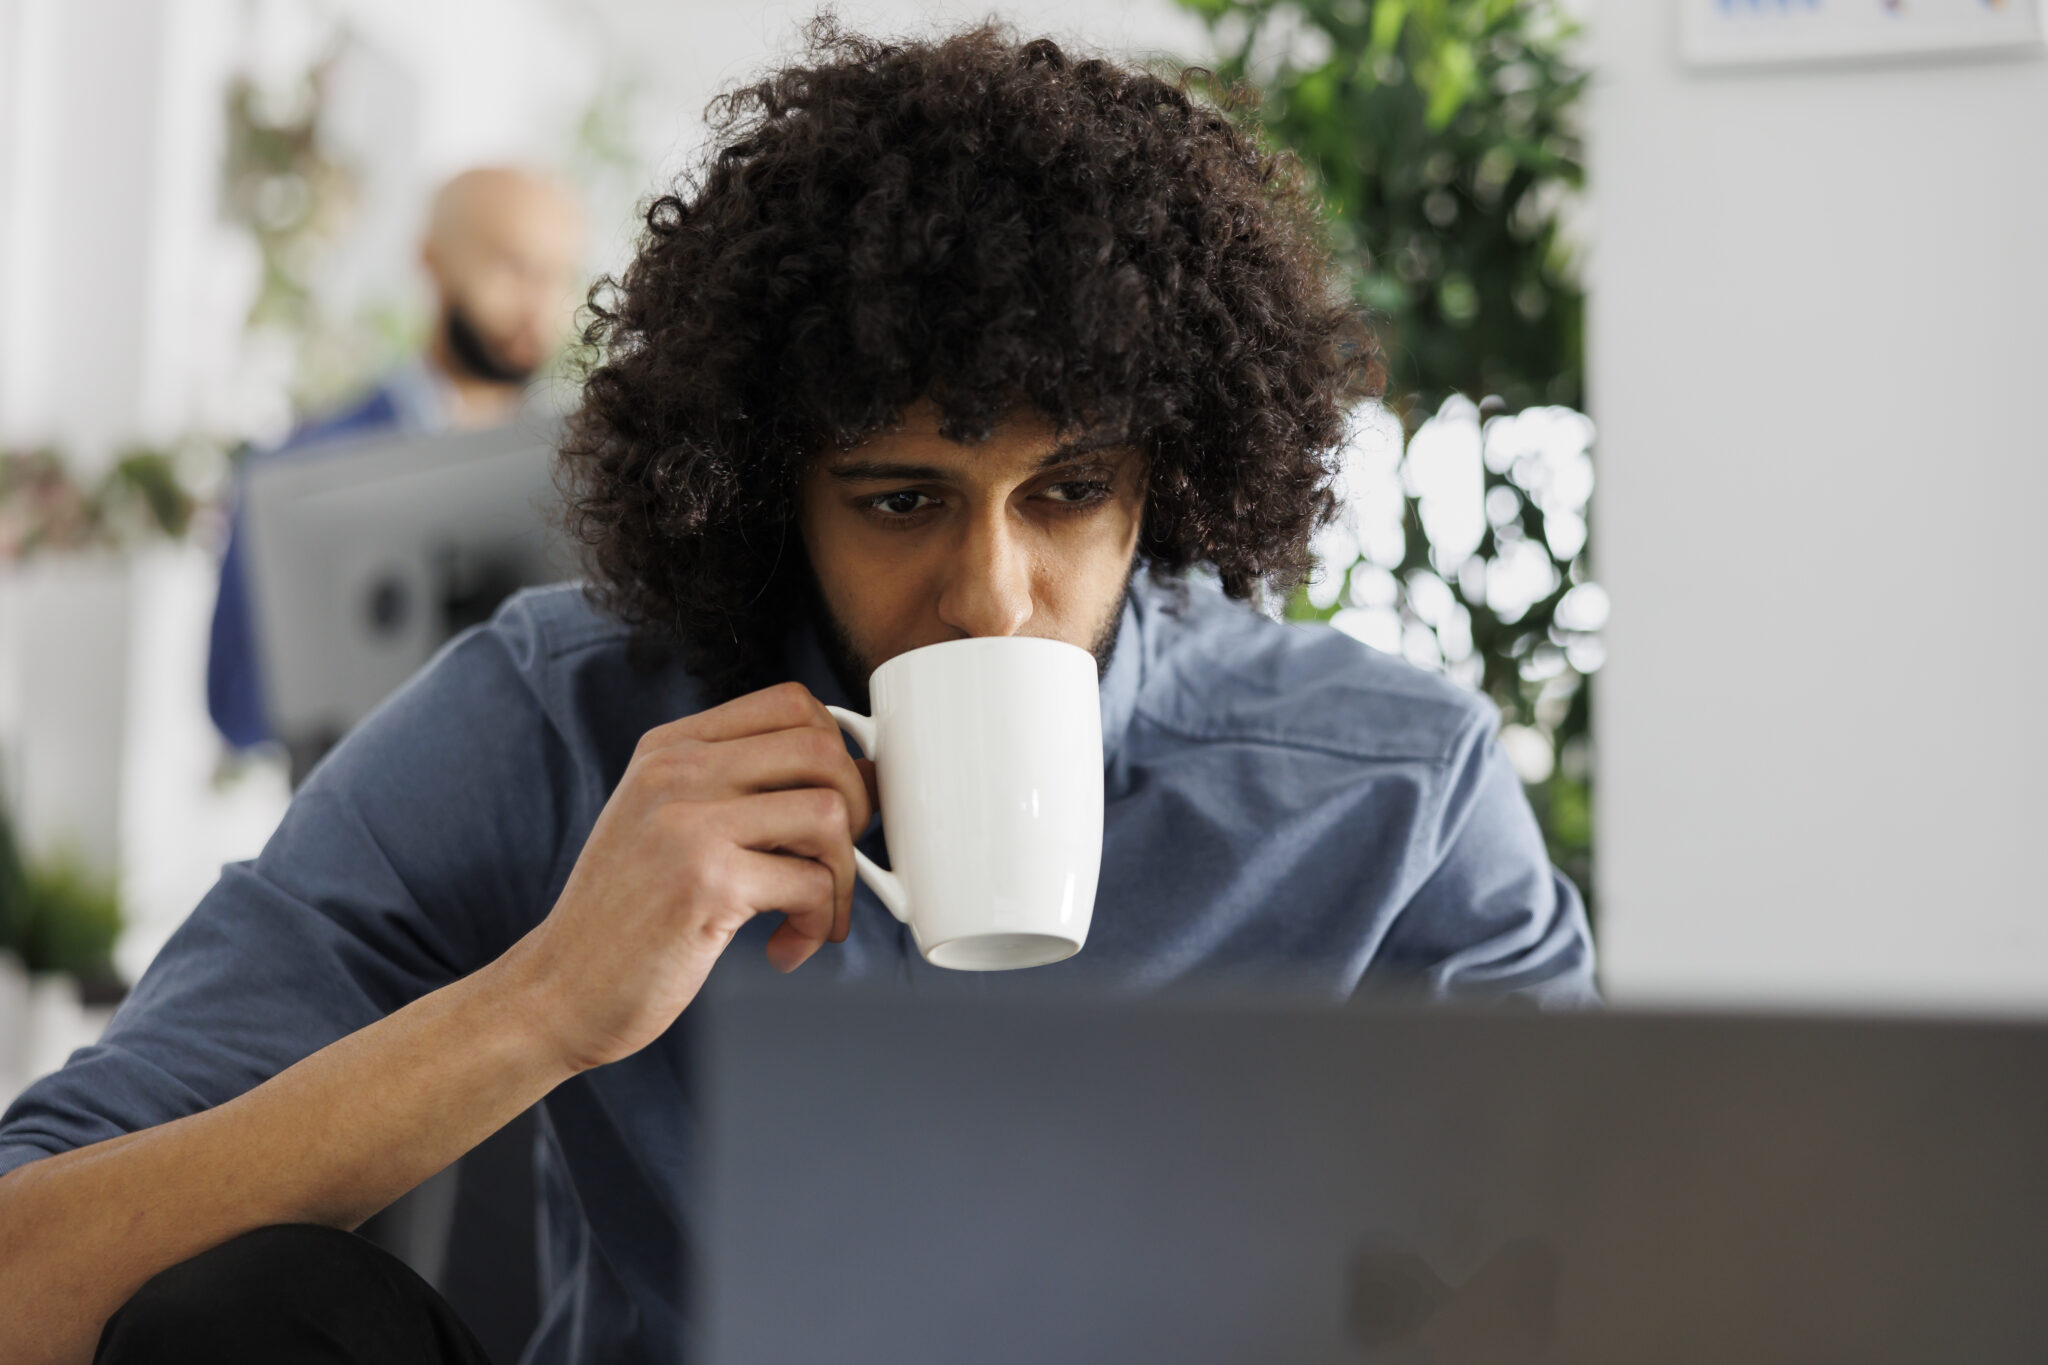 Employee managing seo optimization on laptop while drinking coffee